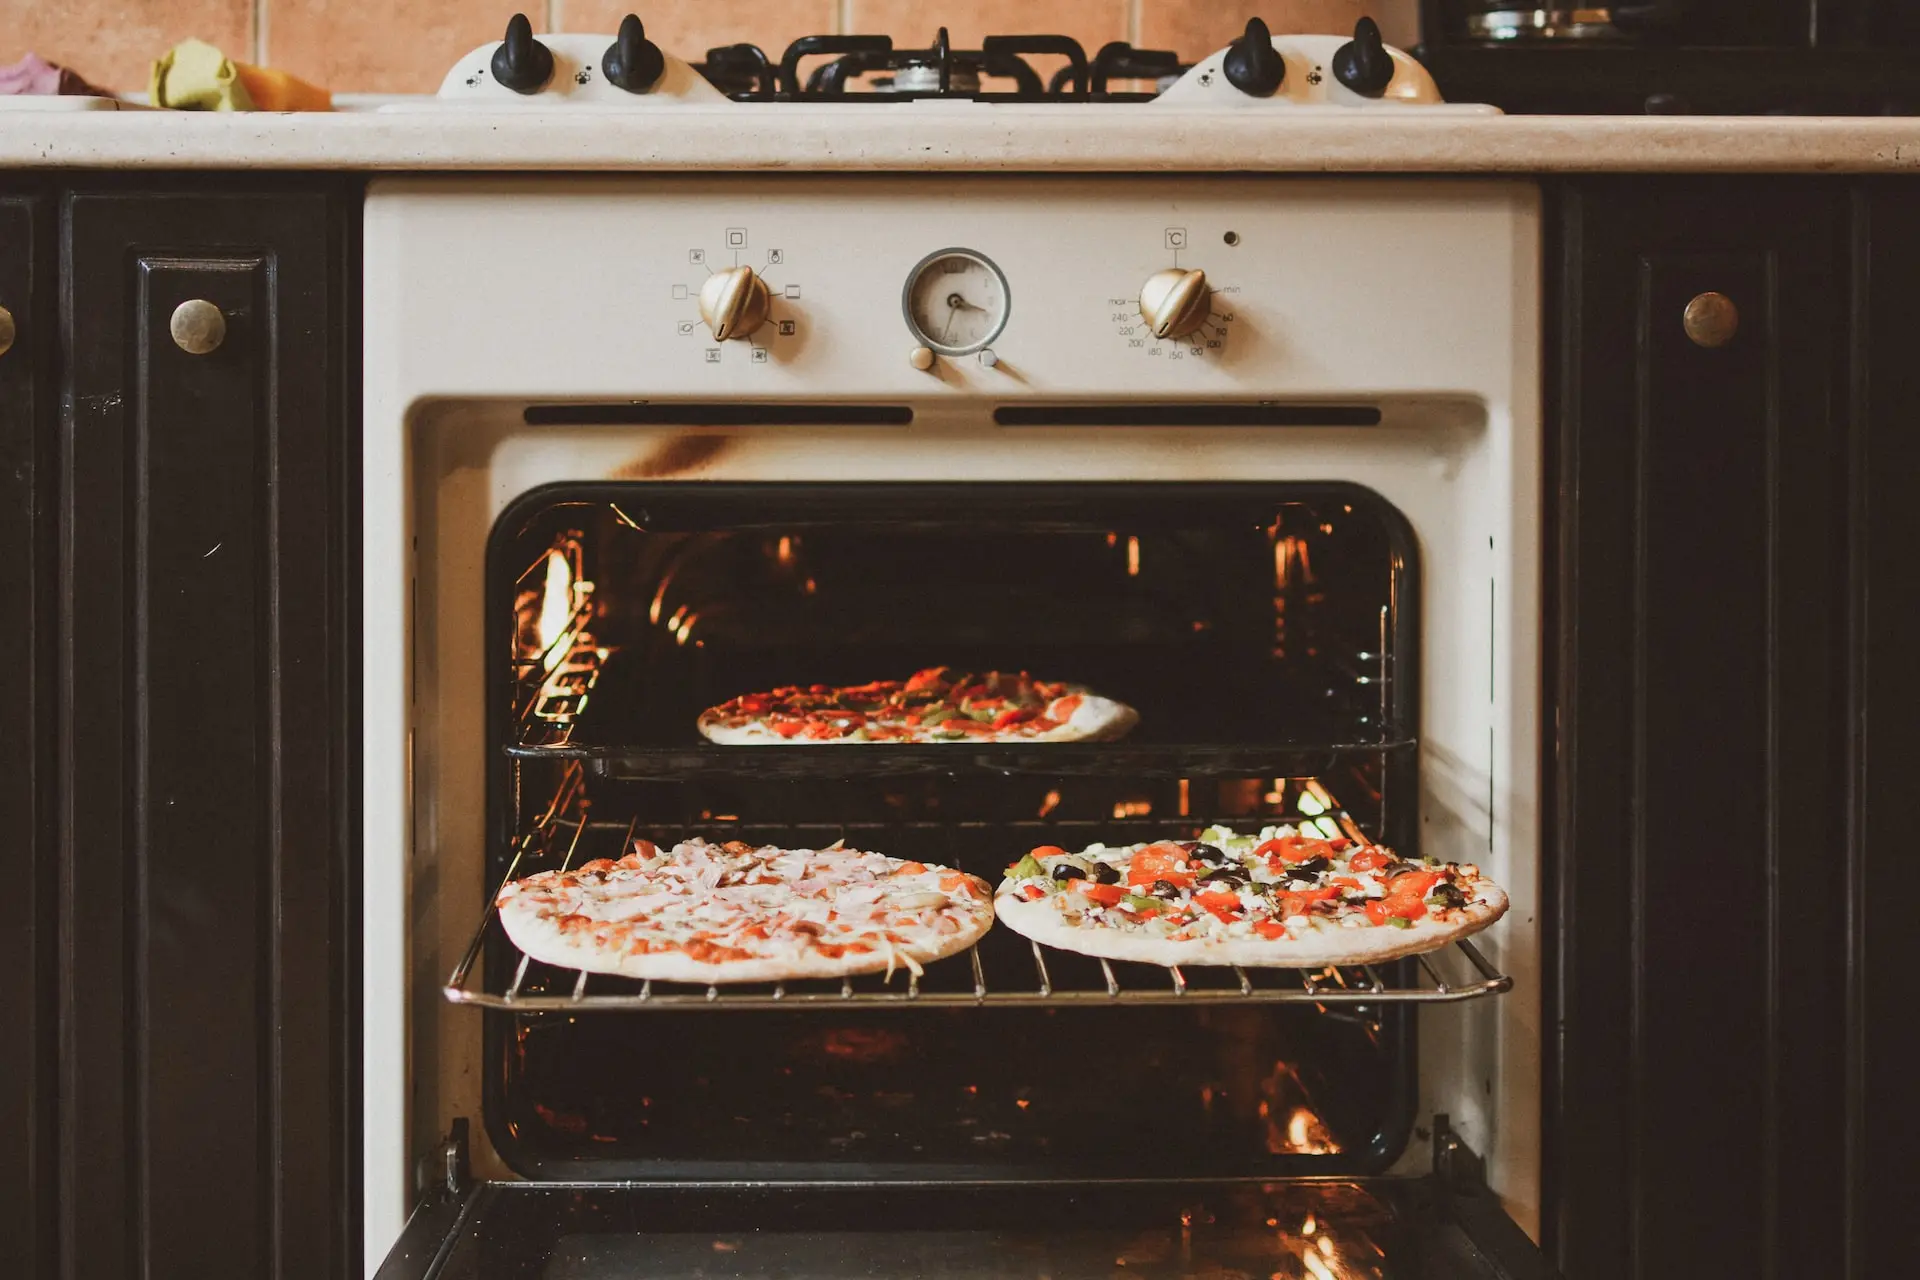 memanggan pizza di oven